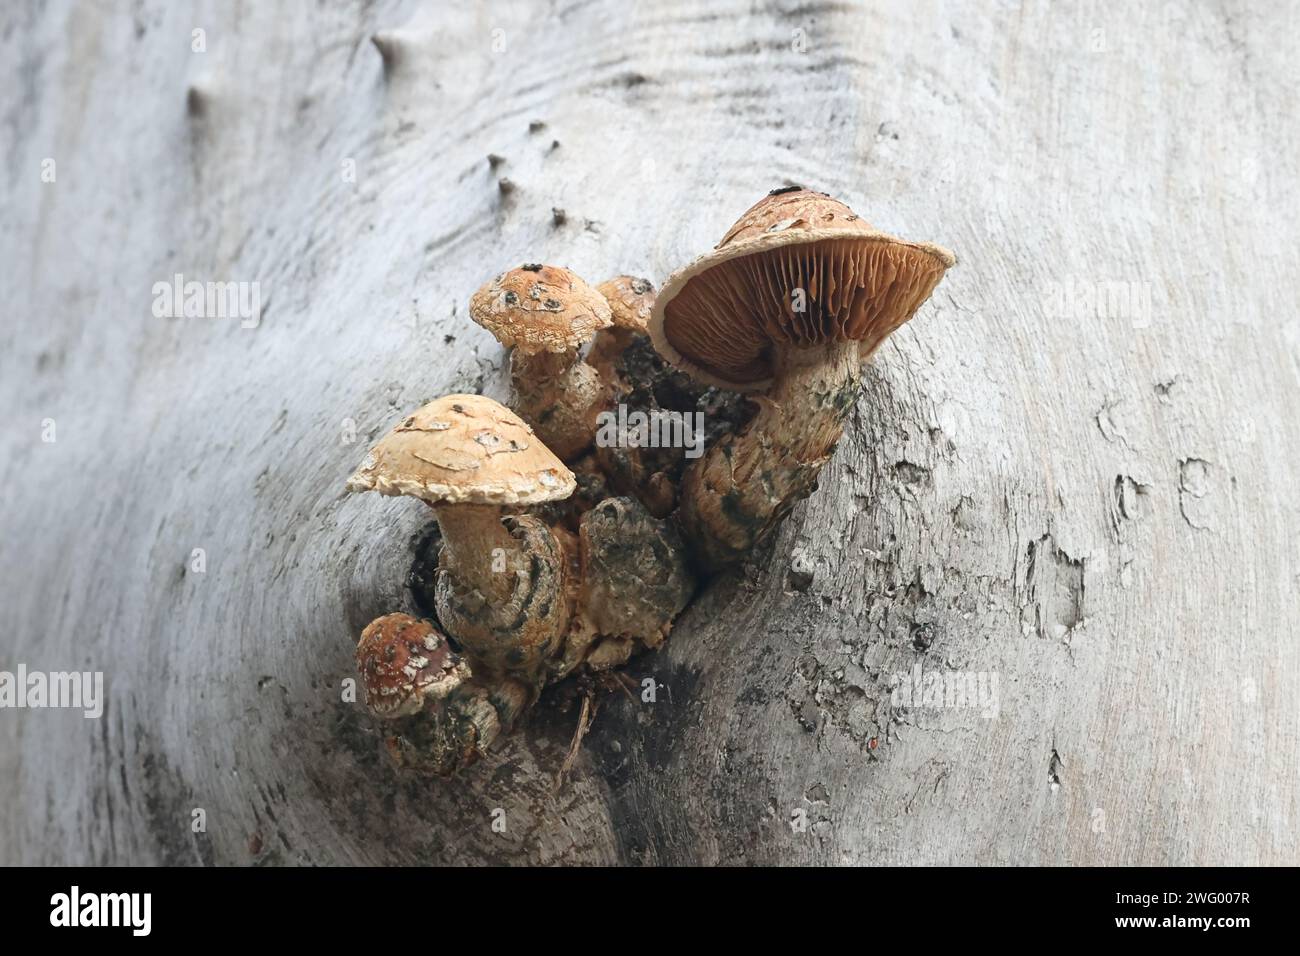 Hemipholiota populnea, also known as Pholiota populnea, a scalycap mushrooms from Finland, no common English name Stock Photo